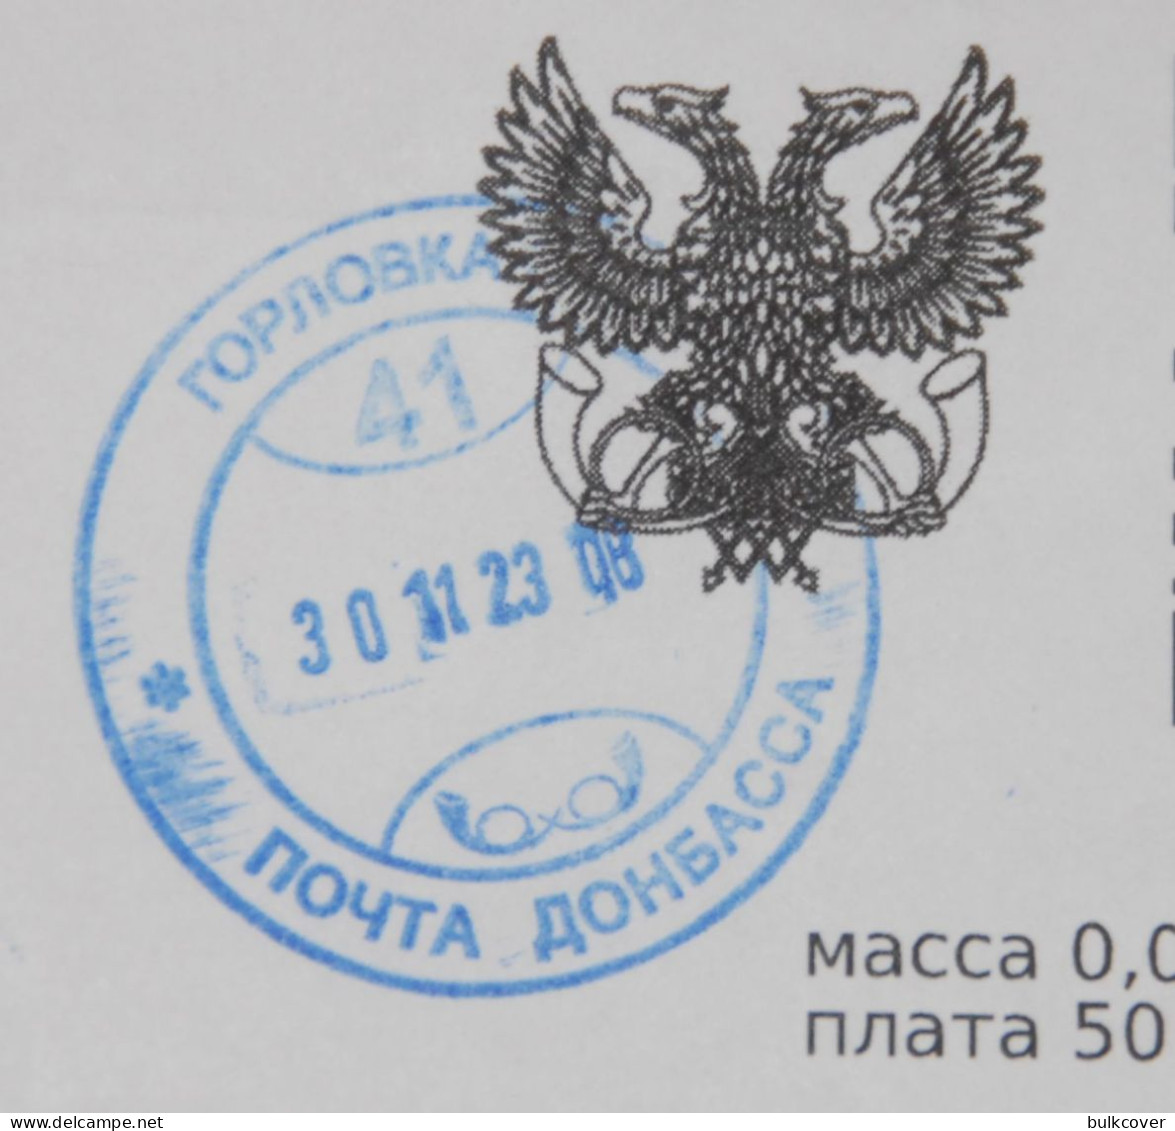 Russian Occupation Of Ukraine Real Mail Cover 2023 Gorlovka DPR DNR Donetsk Republic - Ucraina